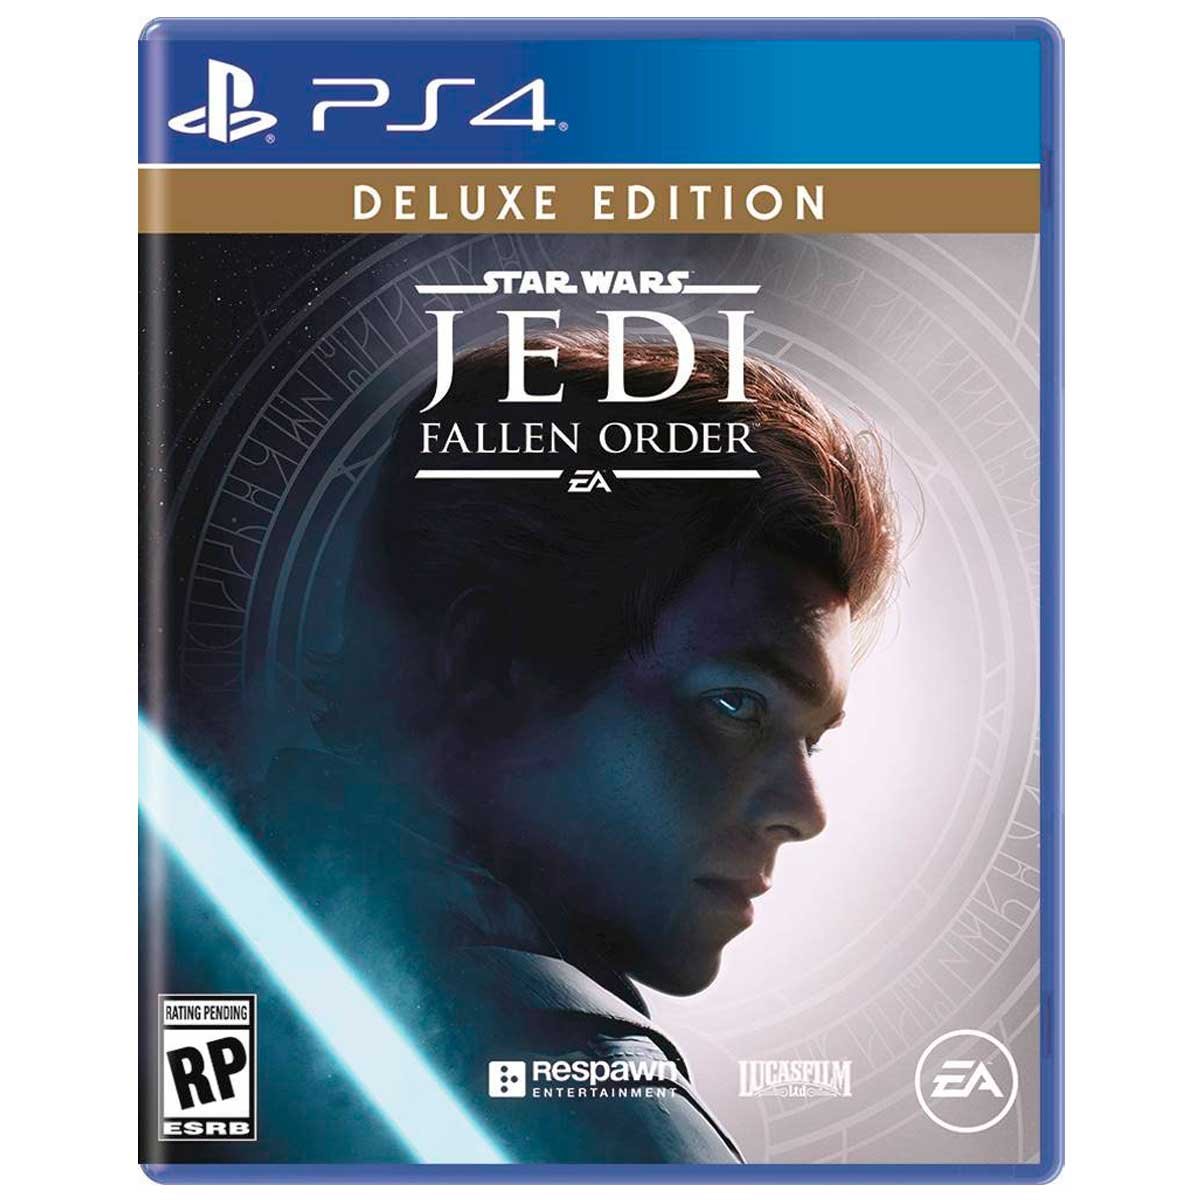 Ps4 Star Wars Jedi Fallen Order Deluxe Edition